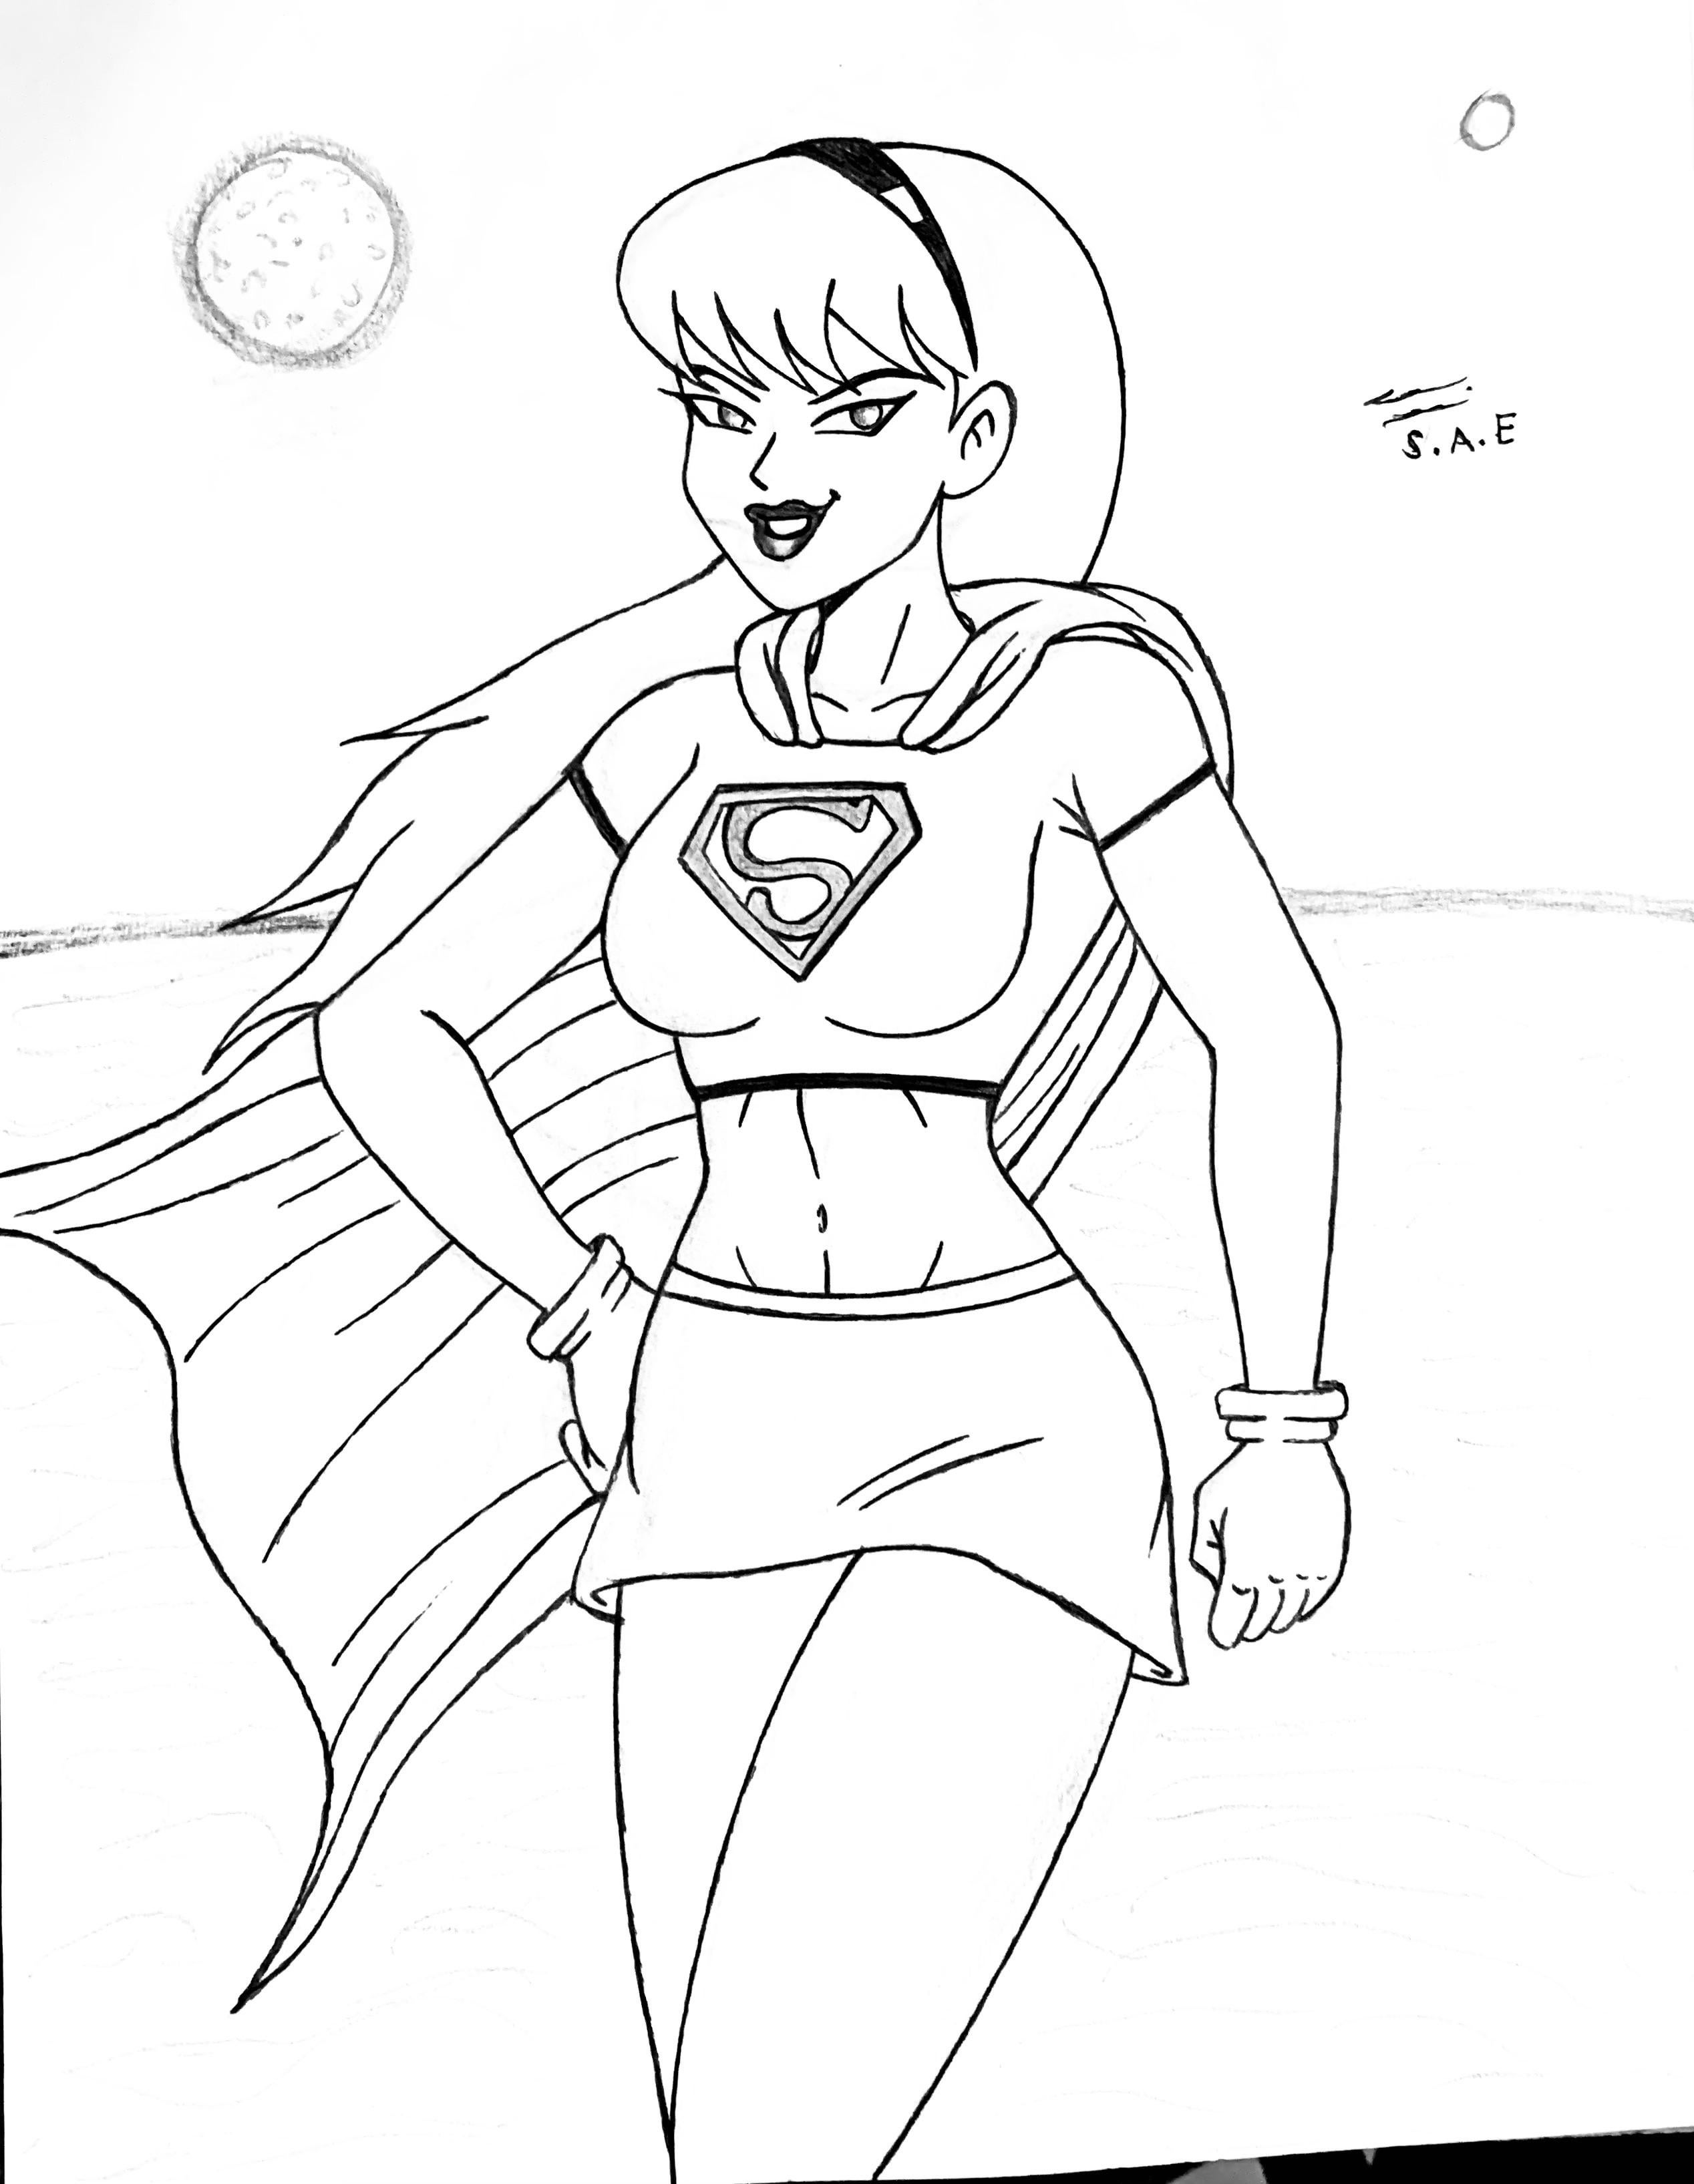 Fanartartwork drawing supergirl rdcics